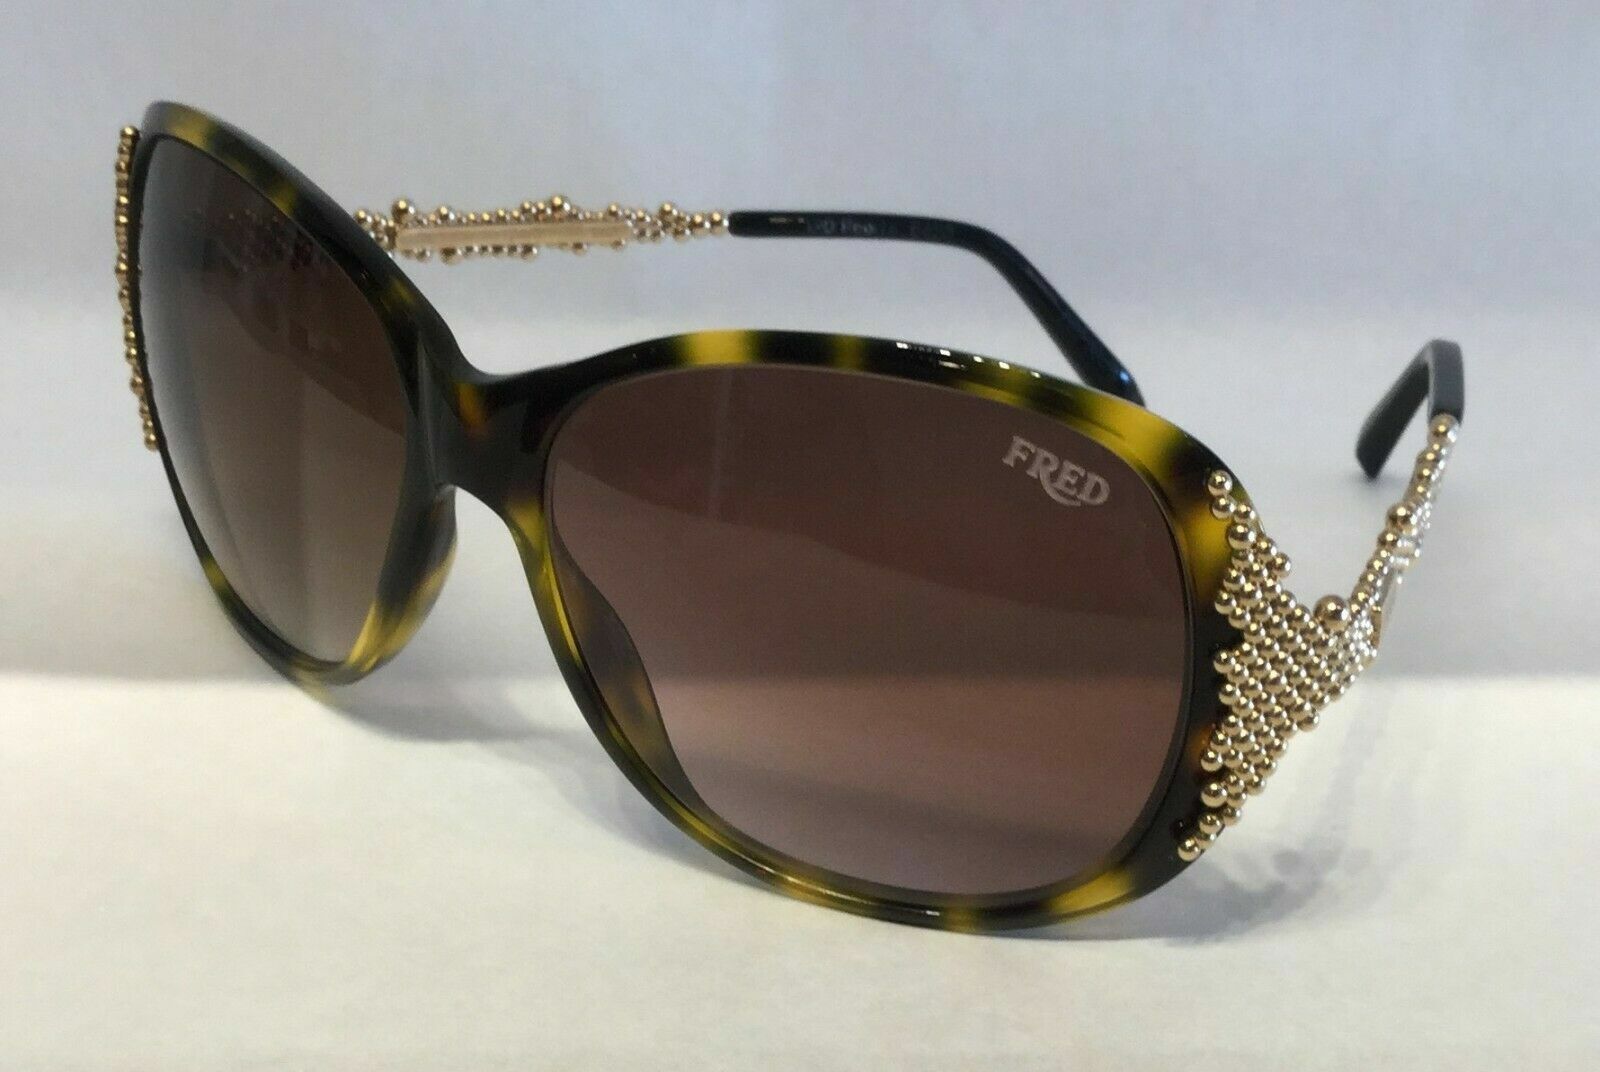 Fred Pearls 8452 203 Havana/Gold Pearls Sunglasses